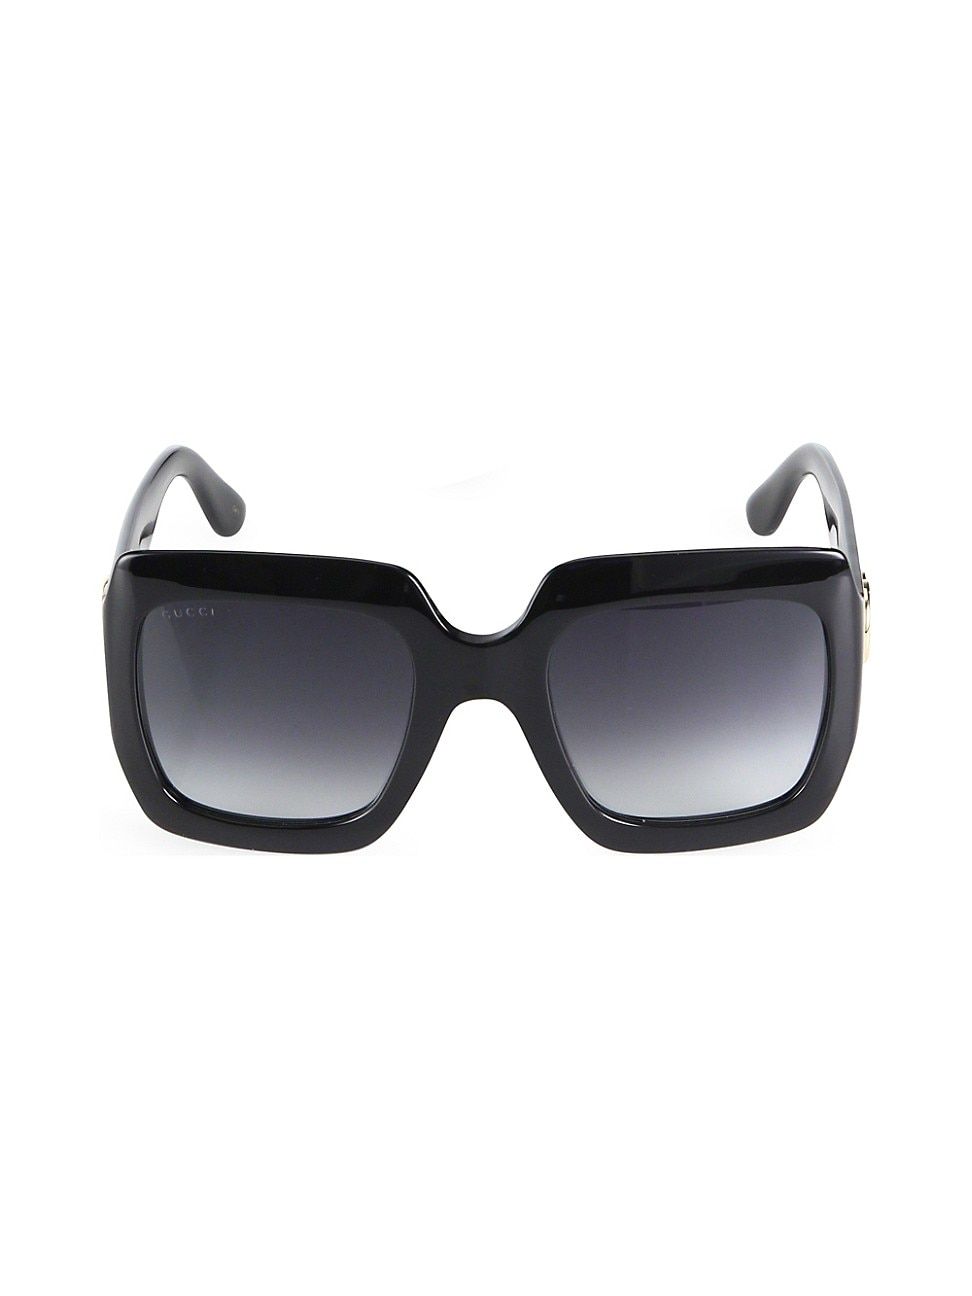 Gucci Women's 54MM Oversized Square Sunglasses - Black | Saks Fifth Avenue